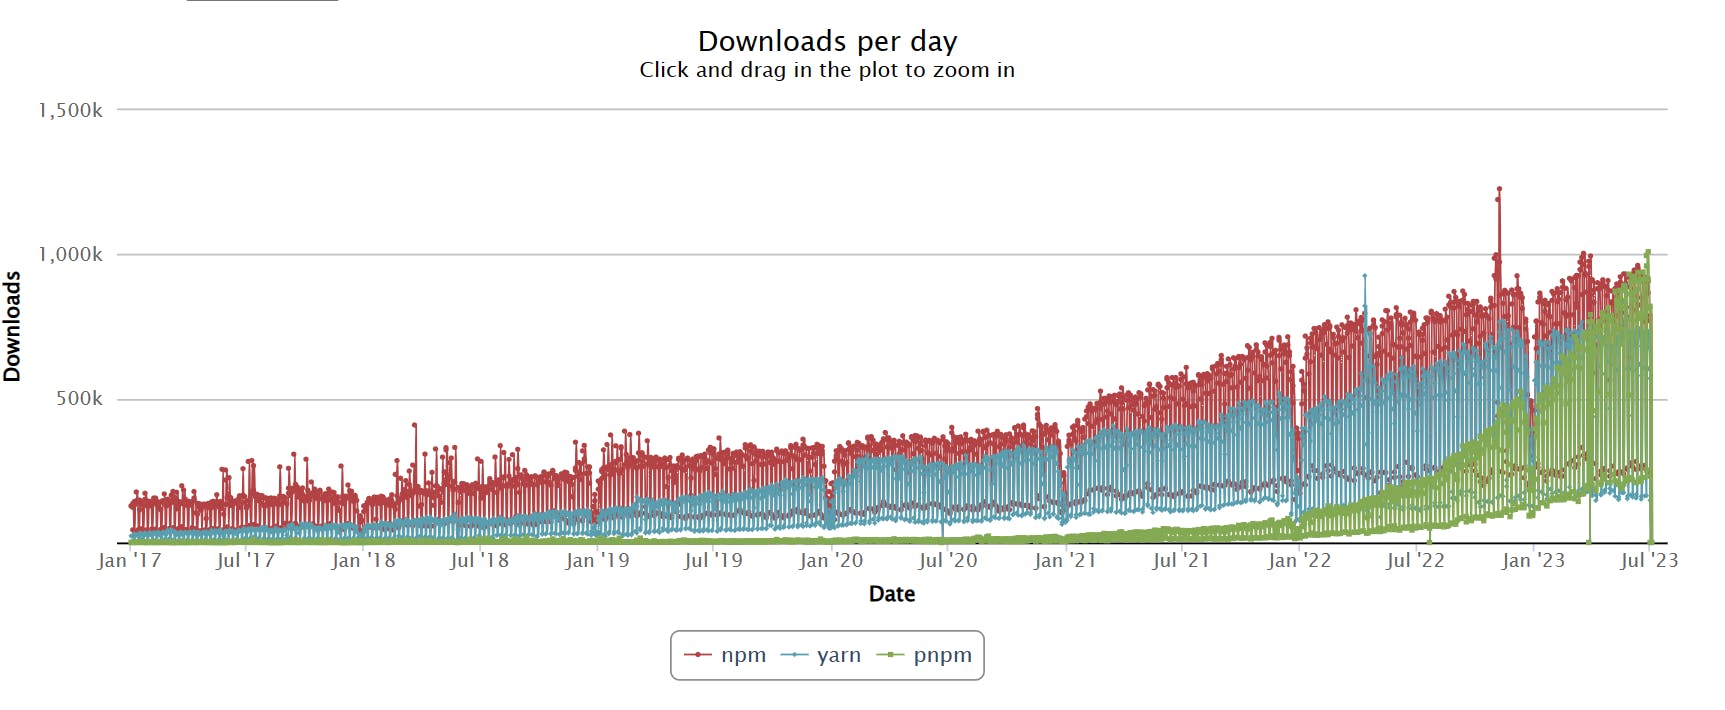 npm vs yarn vs pnpm downloads per day